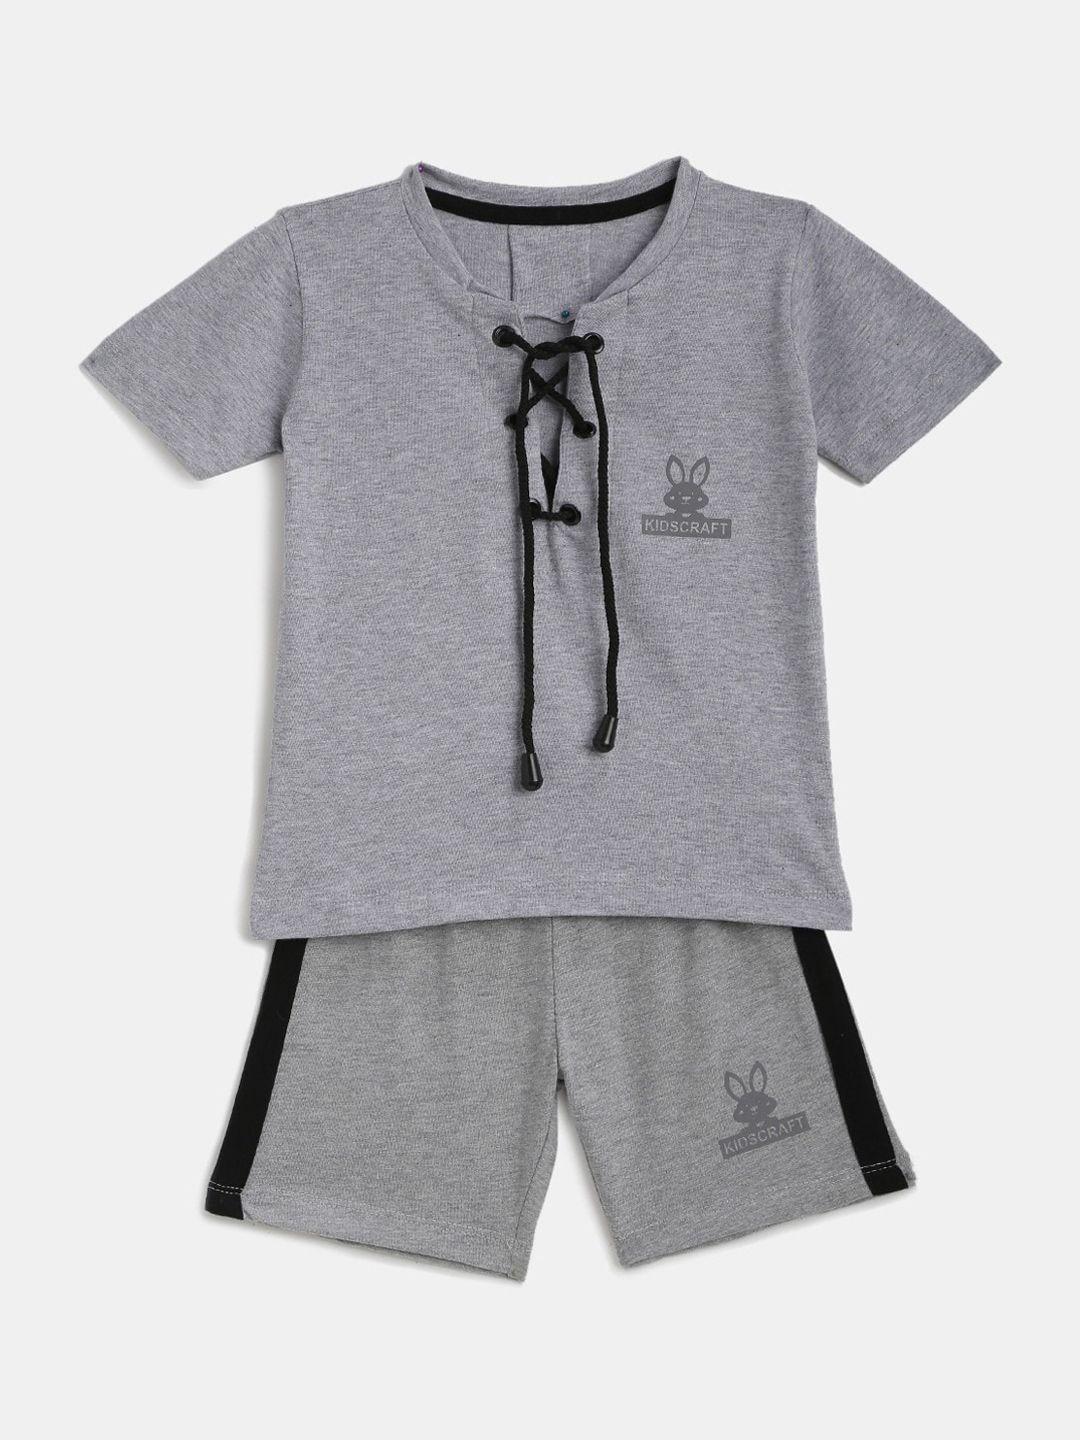 kidscraft-boys-grey-clothing-set